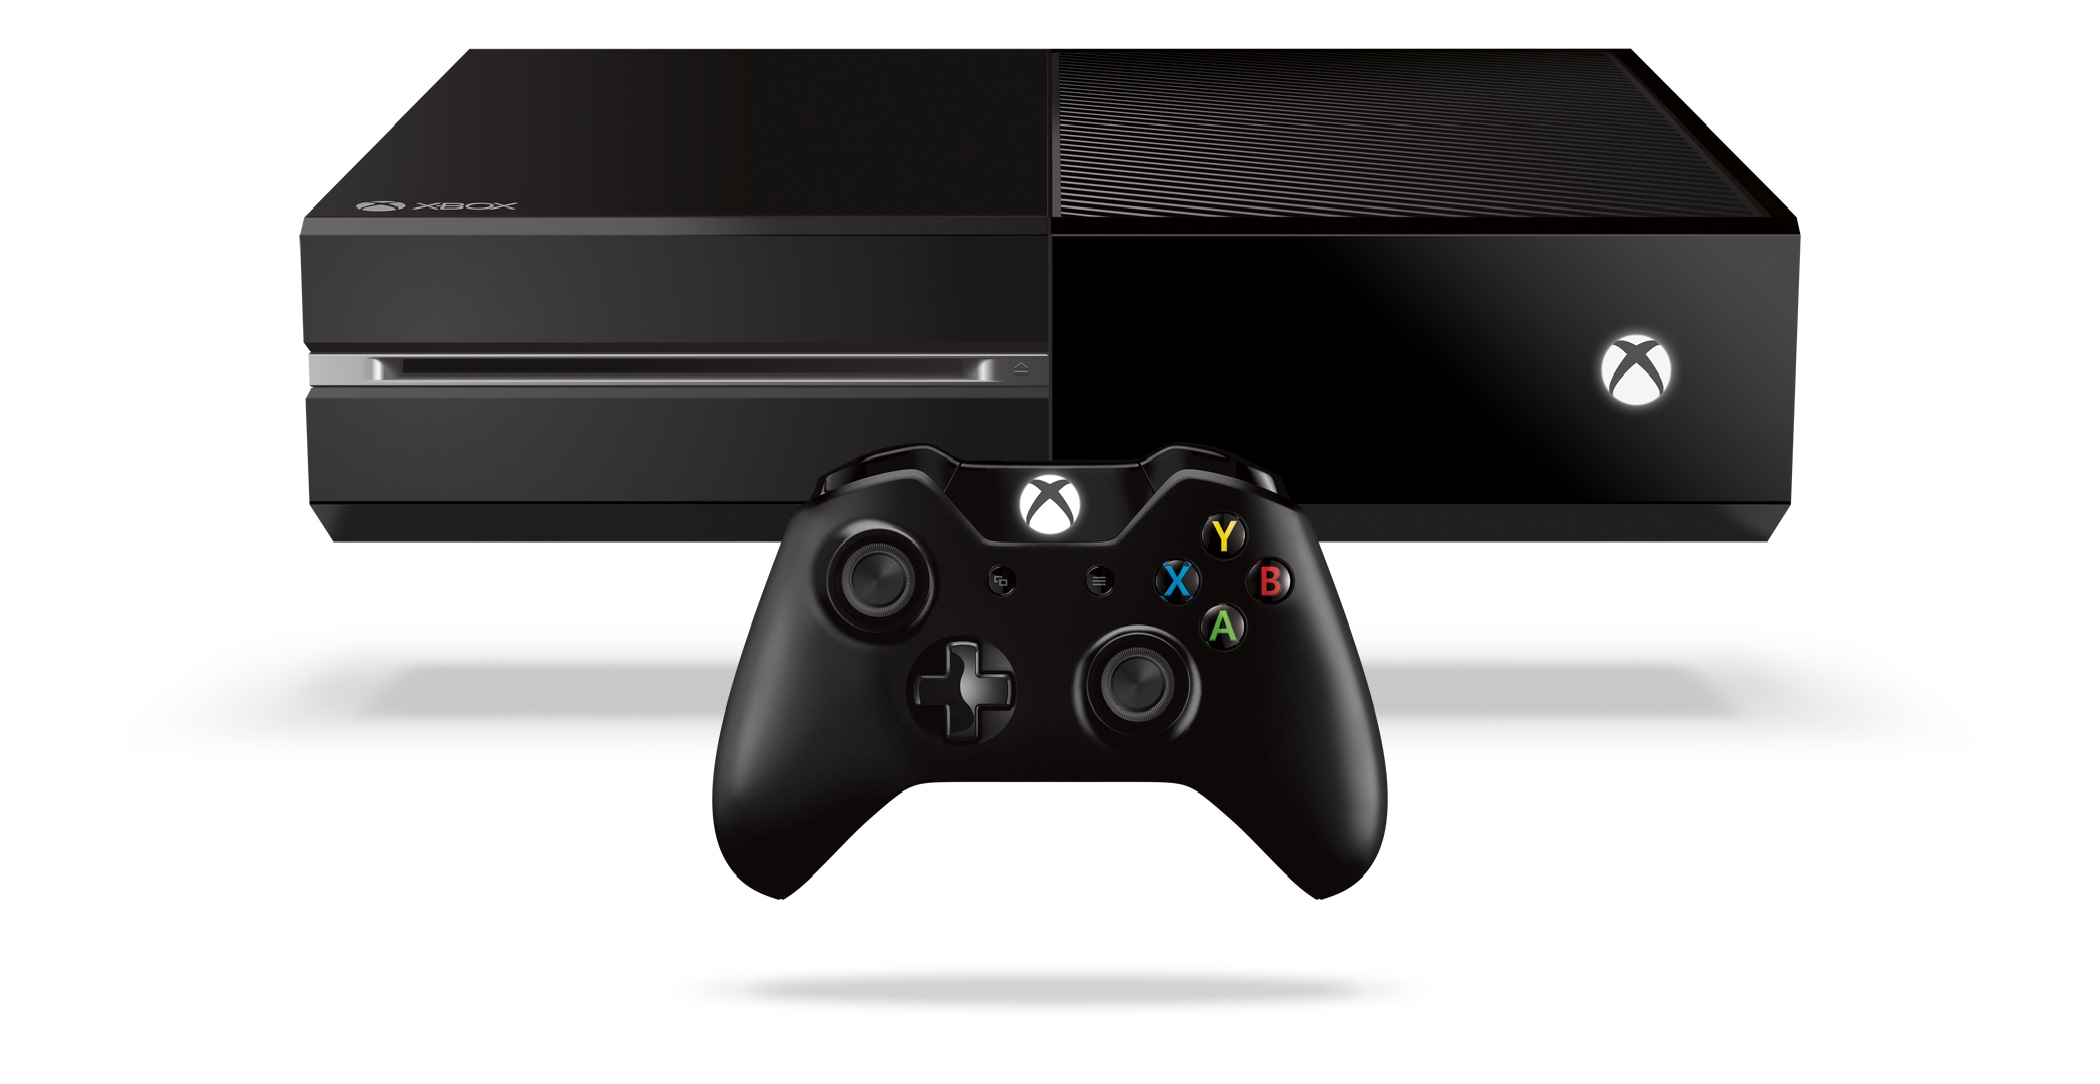 Jogo TITANFALL 2 - Xbox One - Game Fan